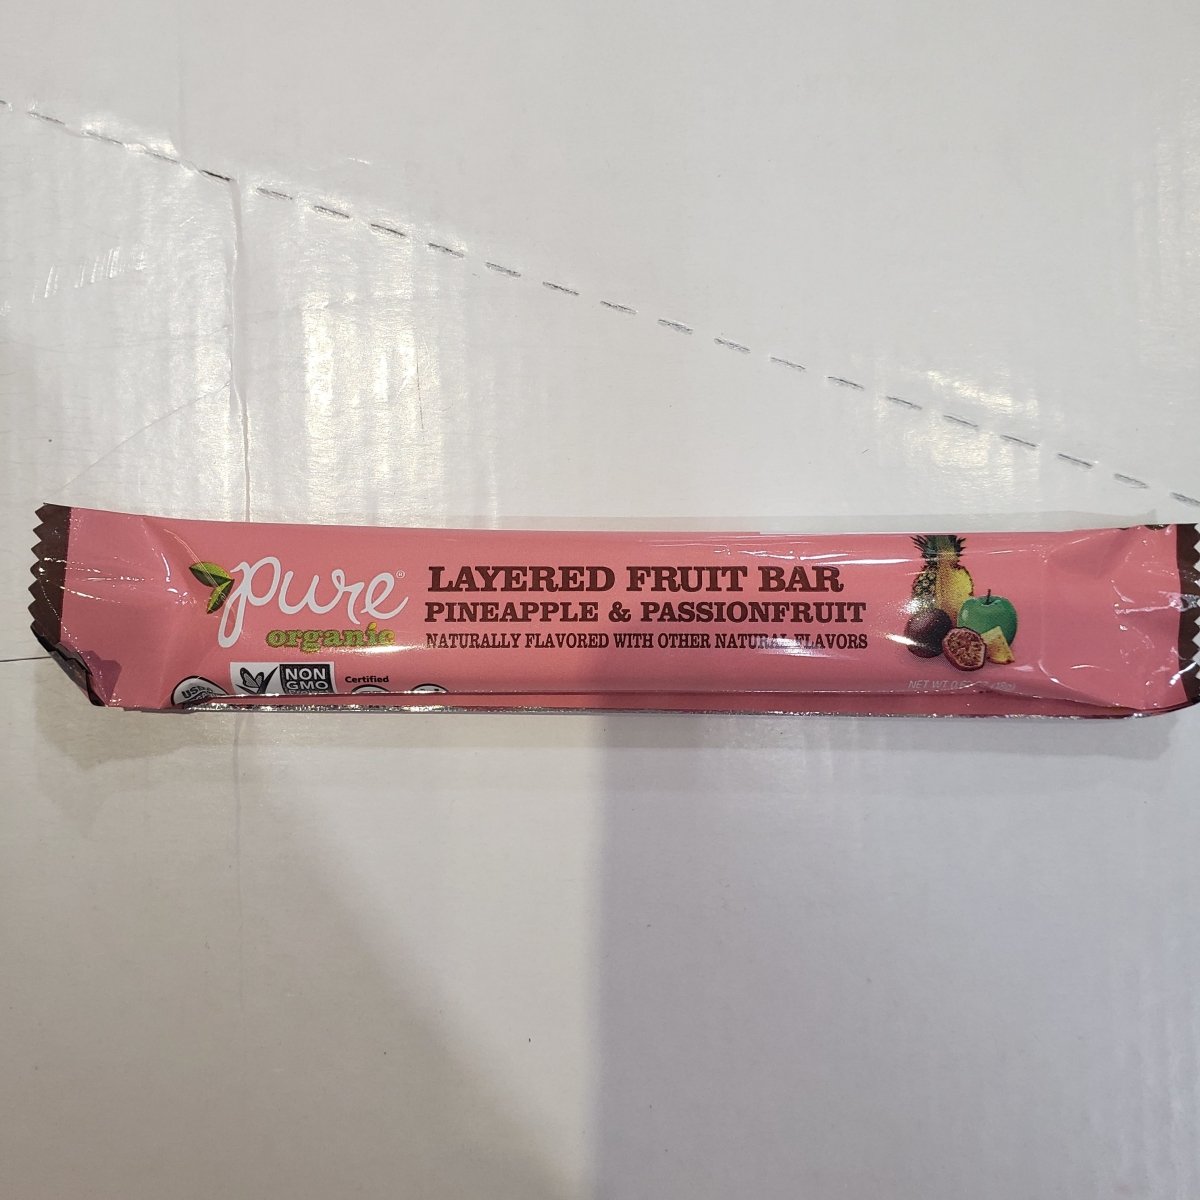 Layered Fruit Bar - Pineapple & PassionFruit - Snack - 1 Bar .62oz